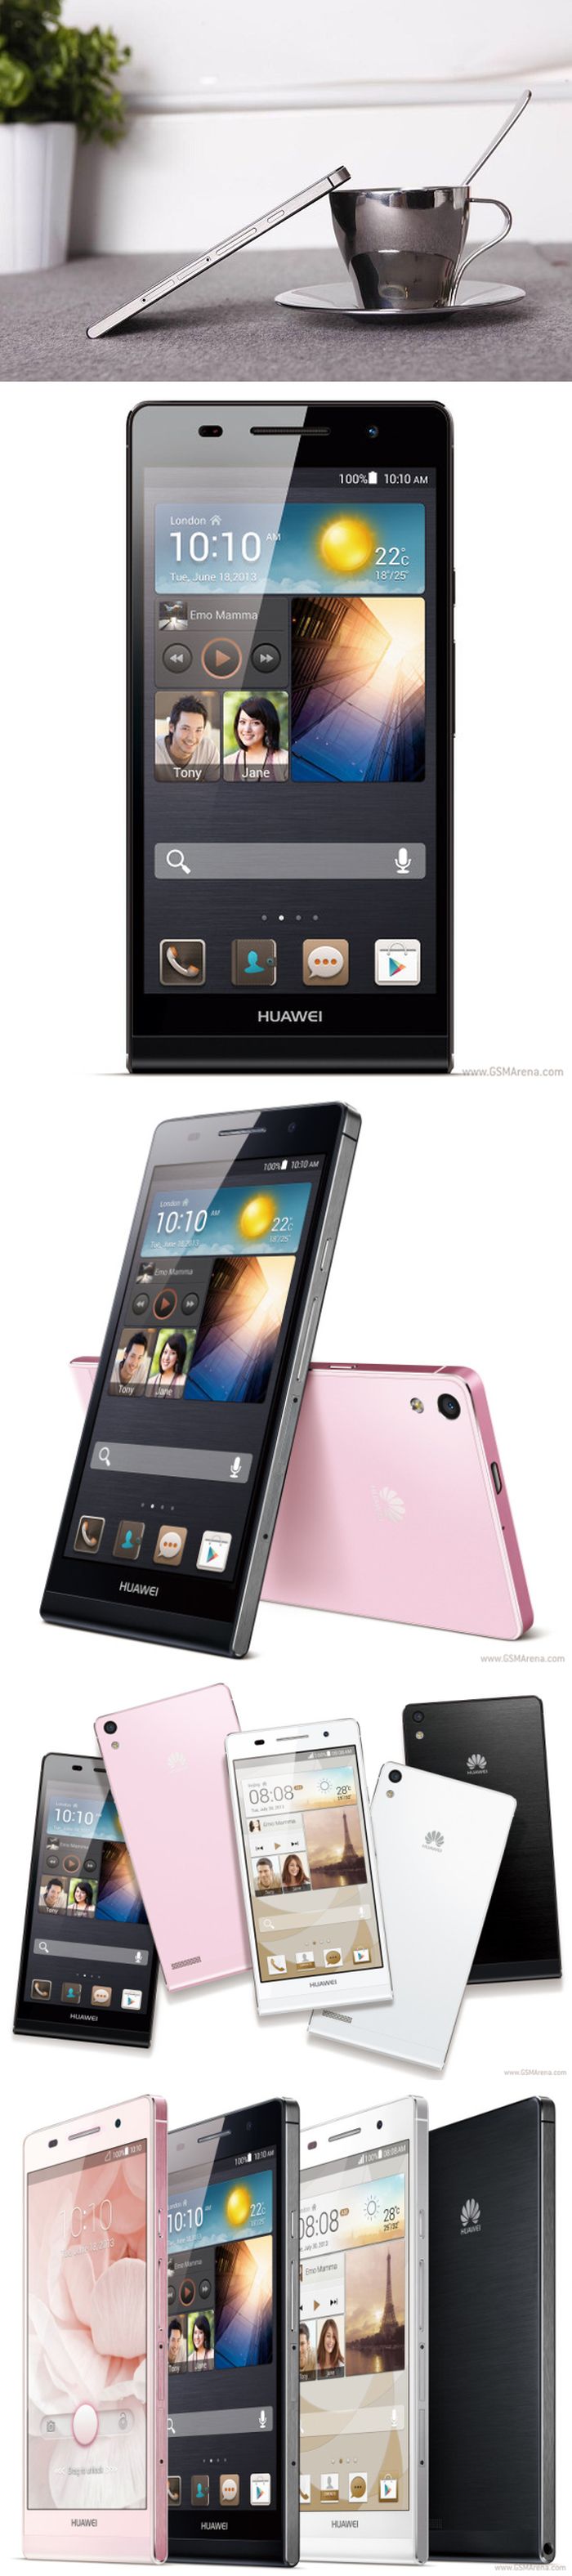 Pengevékony lett a Huawei Ascend P6